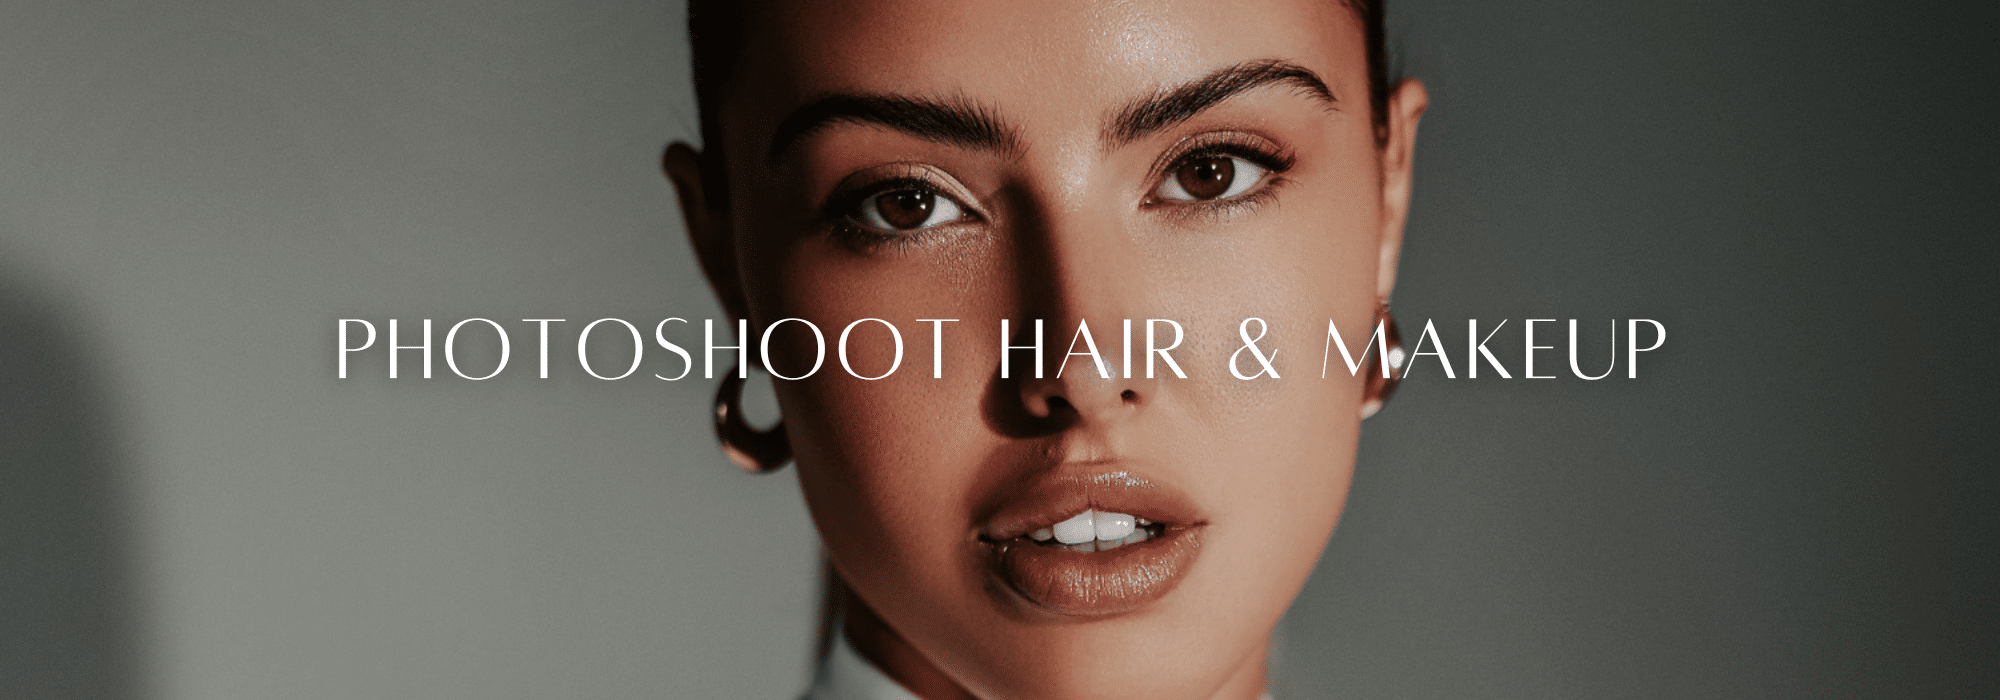 photoshoot hair and makeup